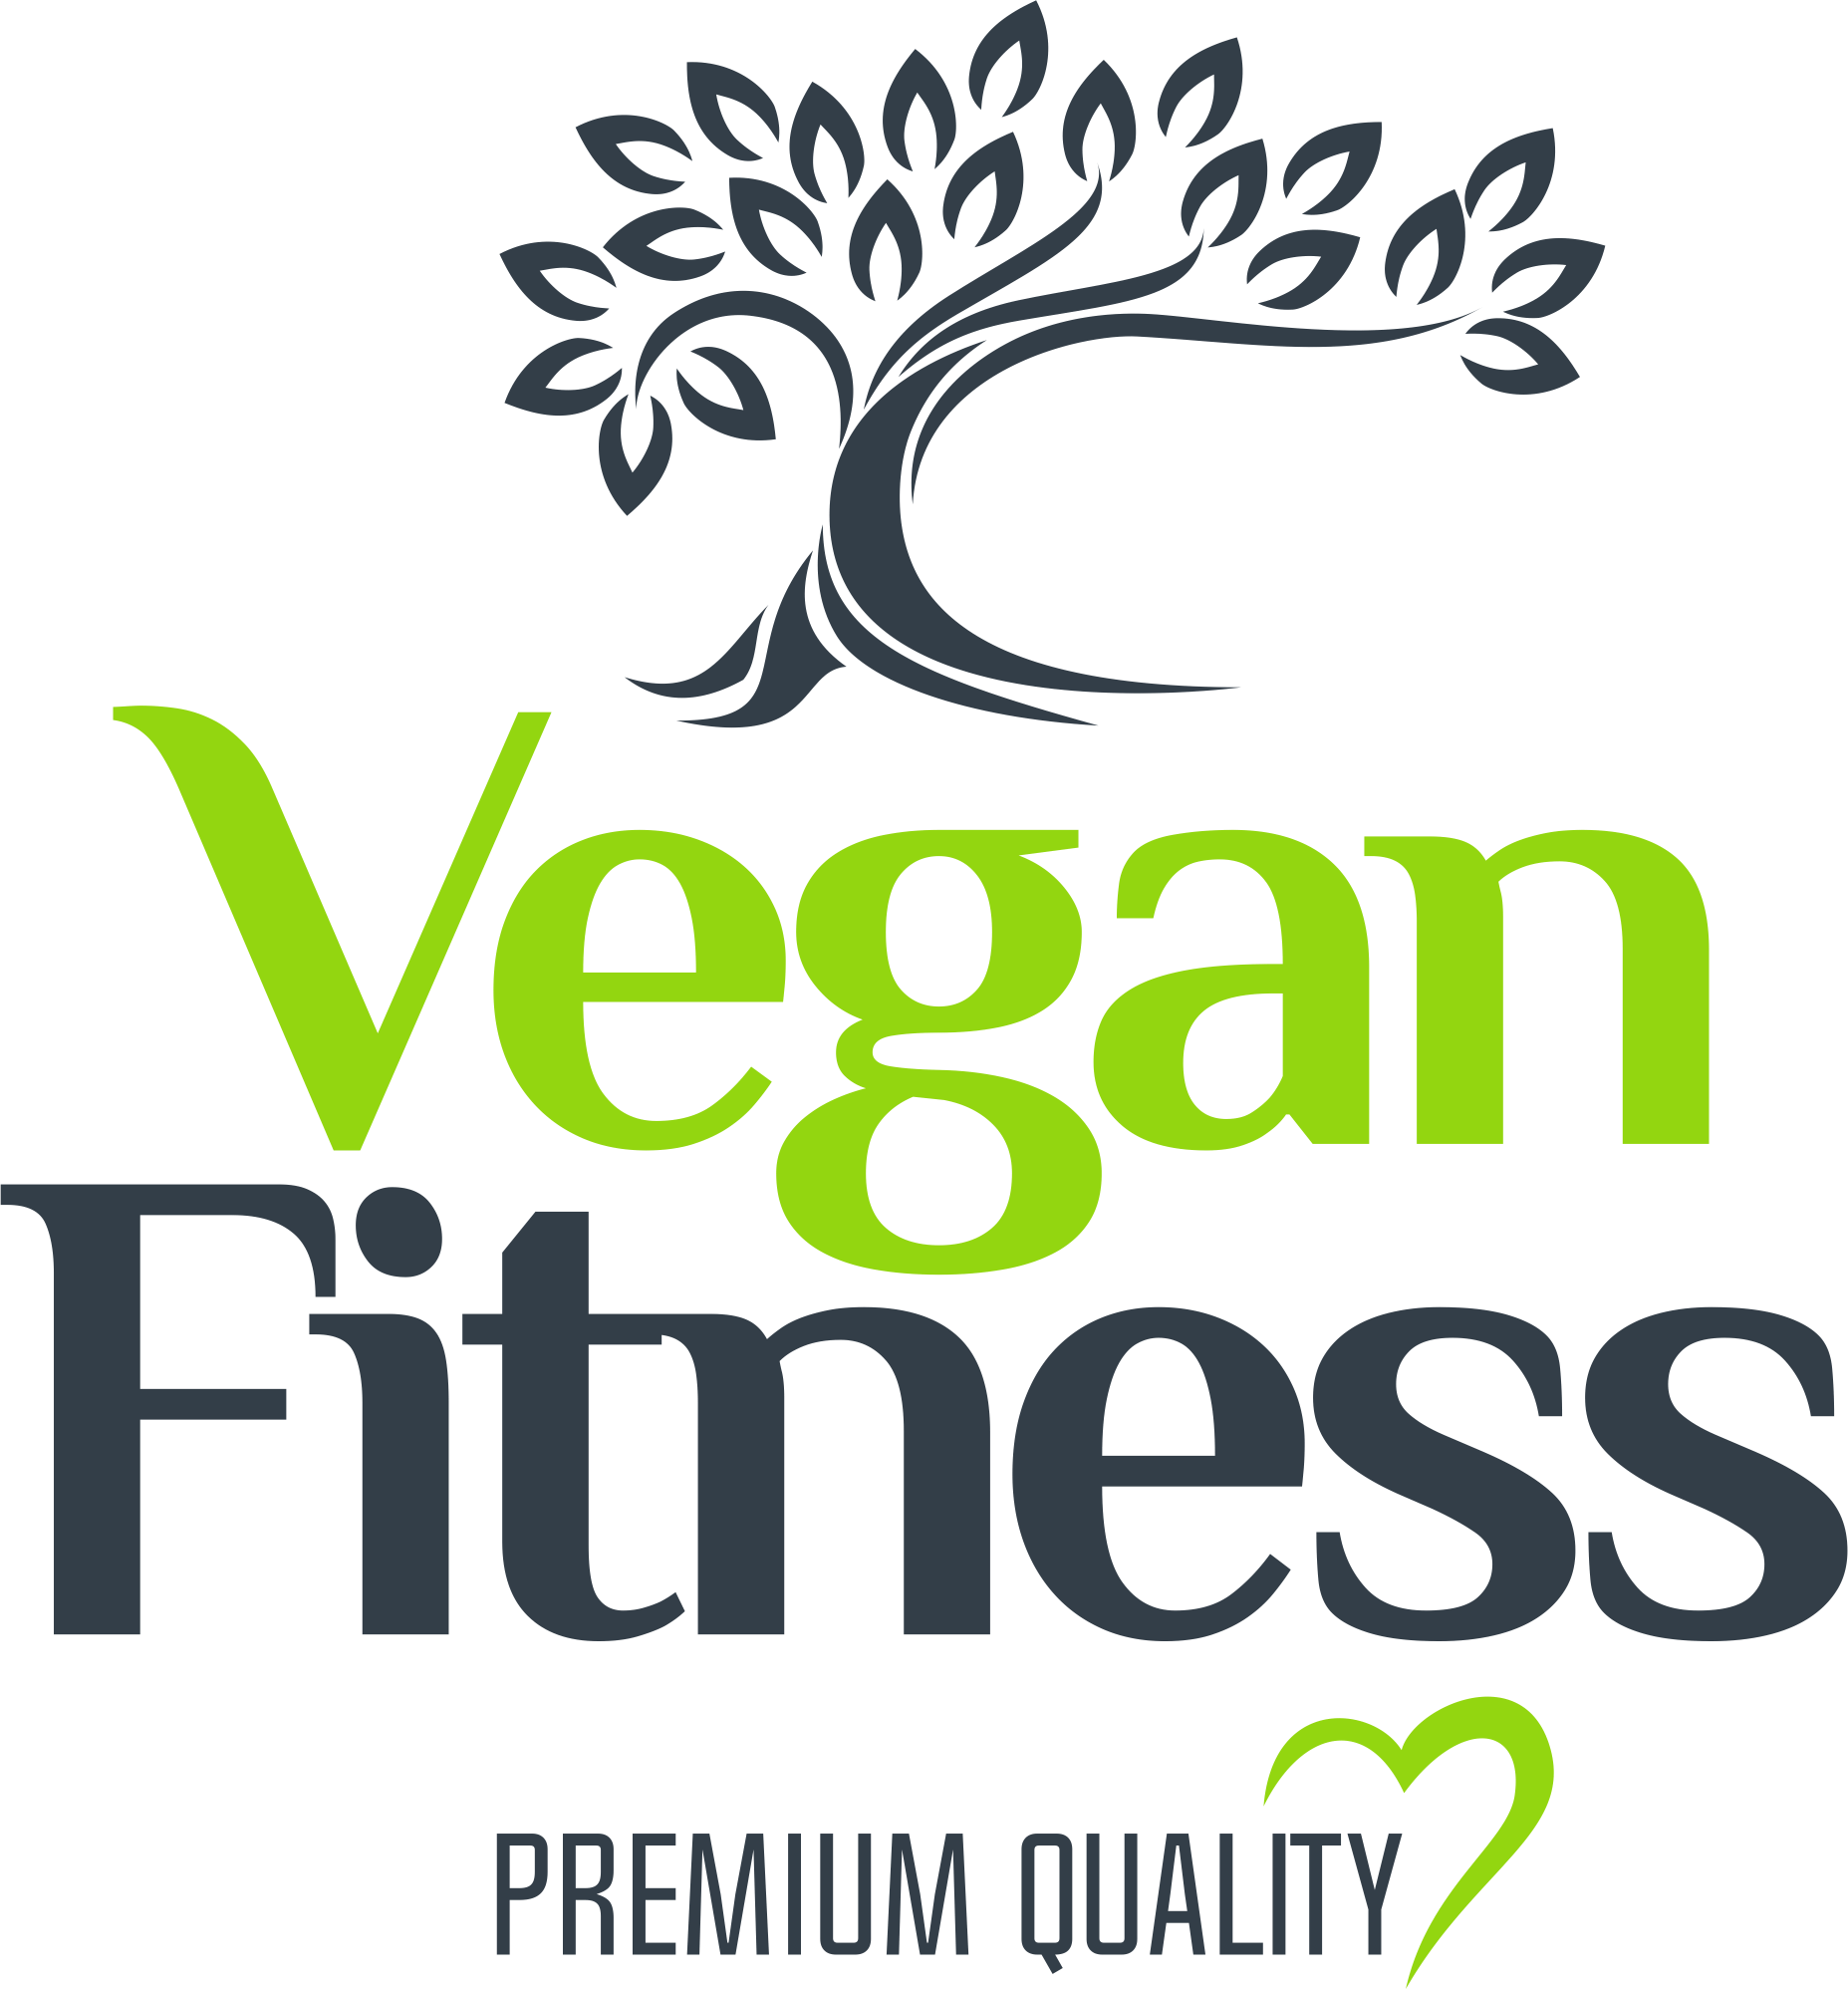 Vegan Fitness